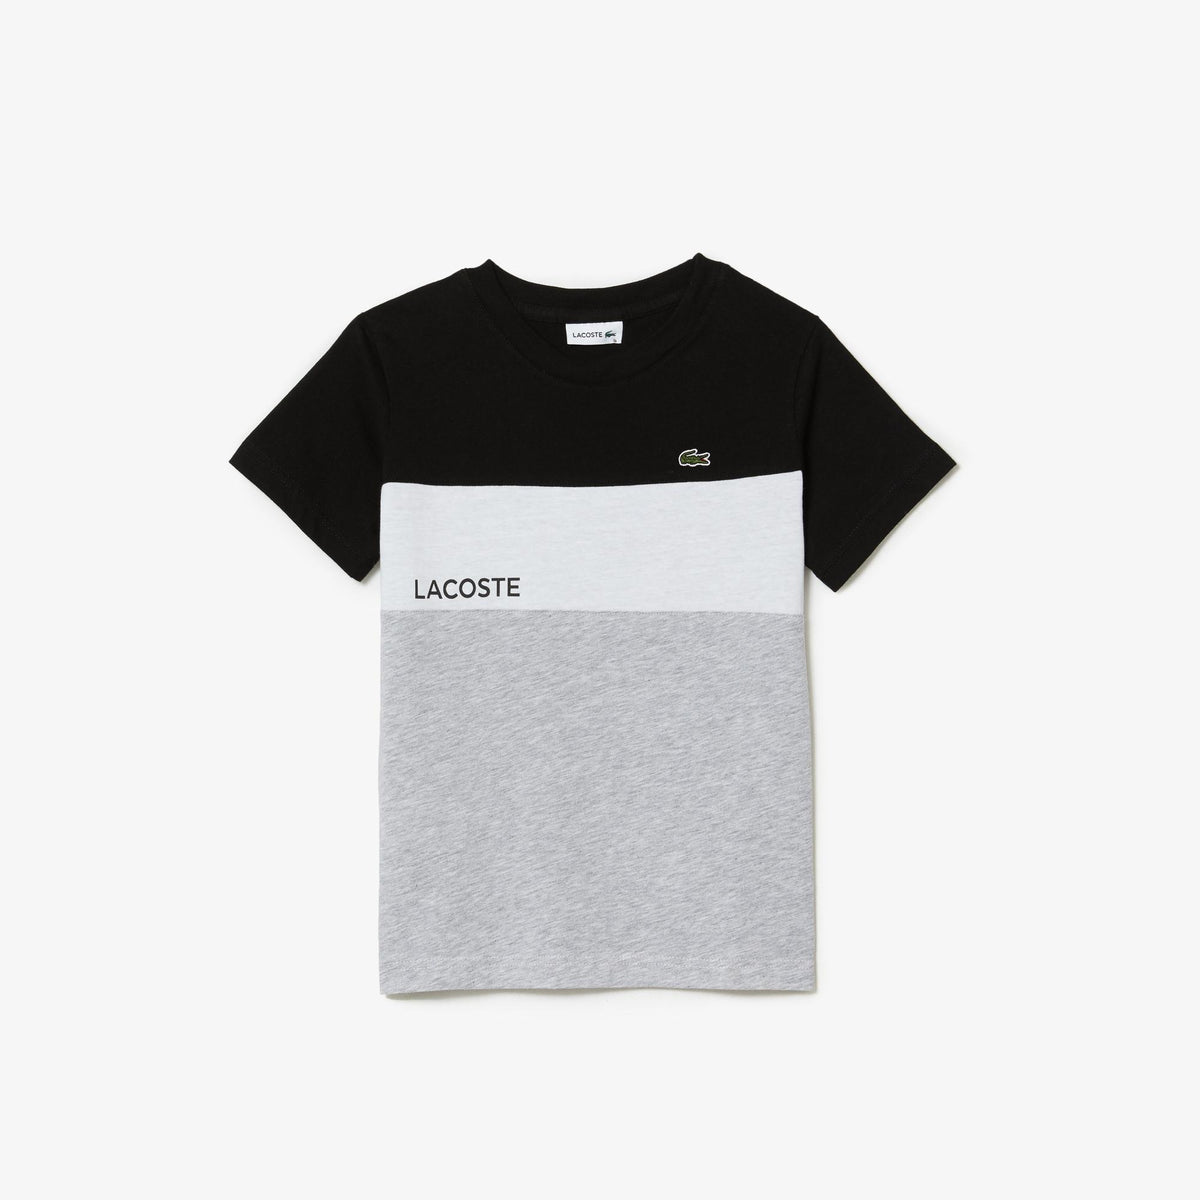 Lacoste Boys’ 3 Tone T-Shirt